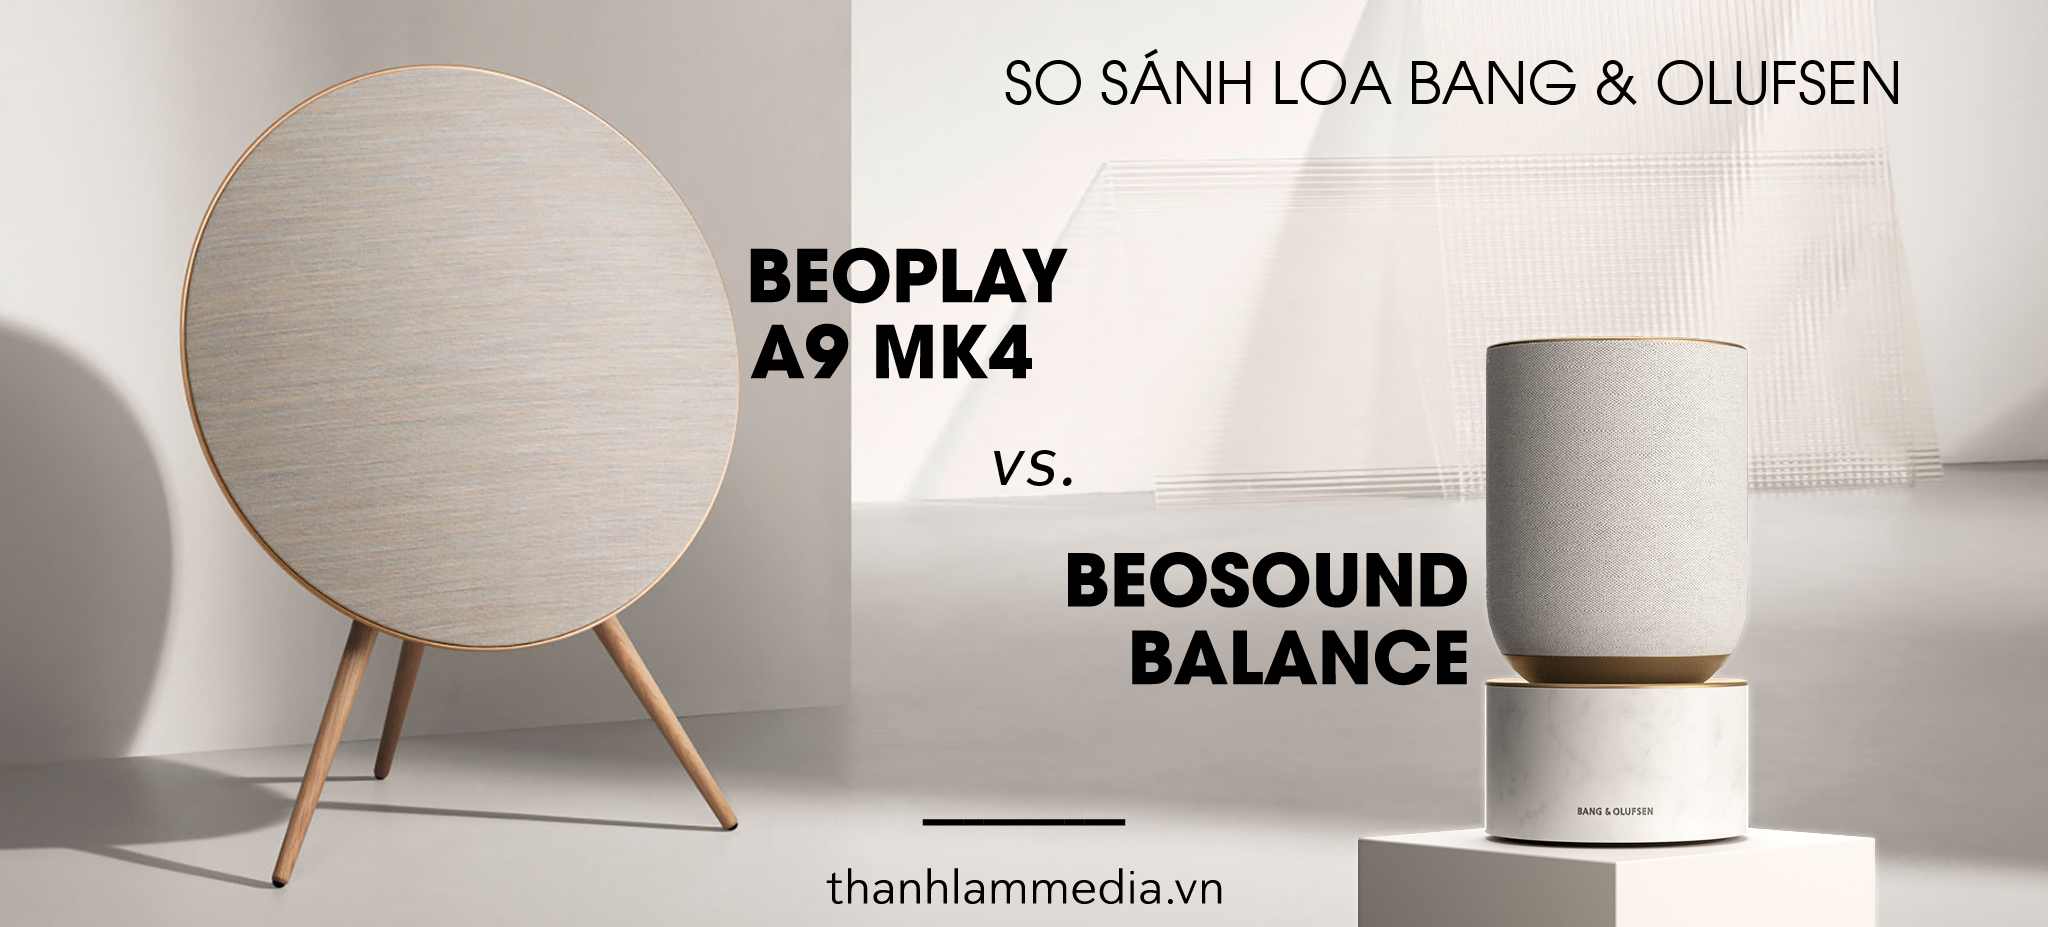 So sánh hai mẫu loa Bang & Olufsen: Beoplay A9 MK4 vs Beosound Balance 2